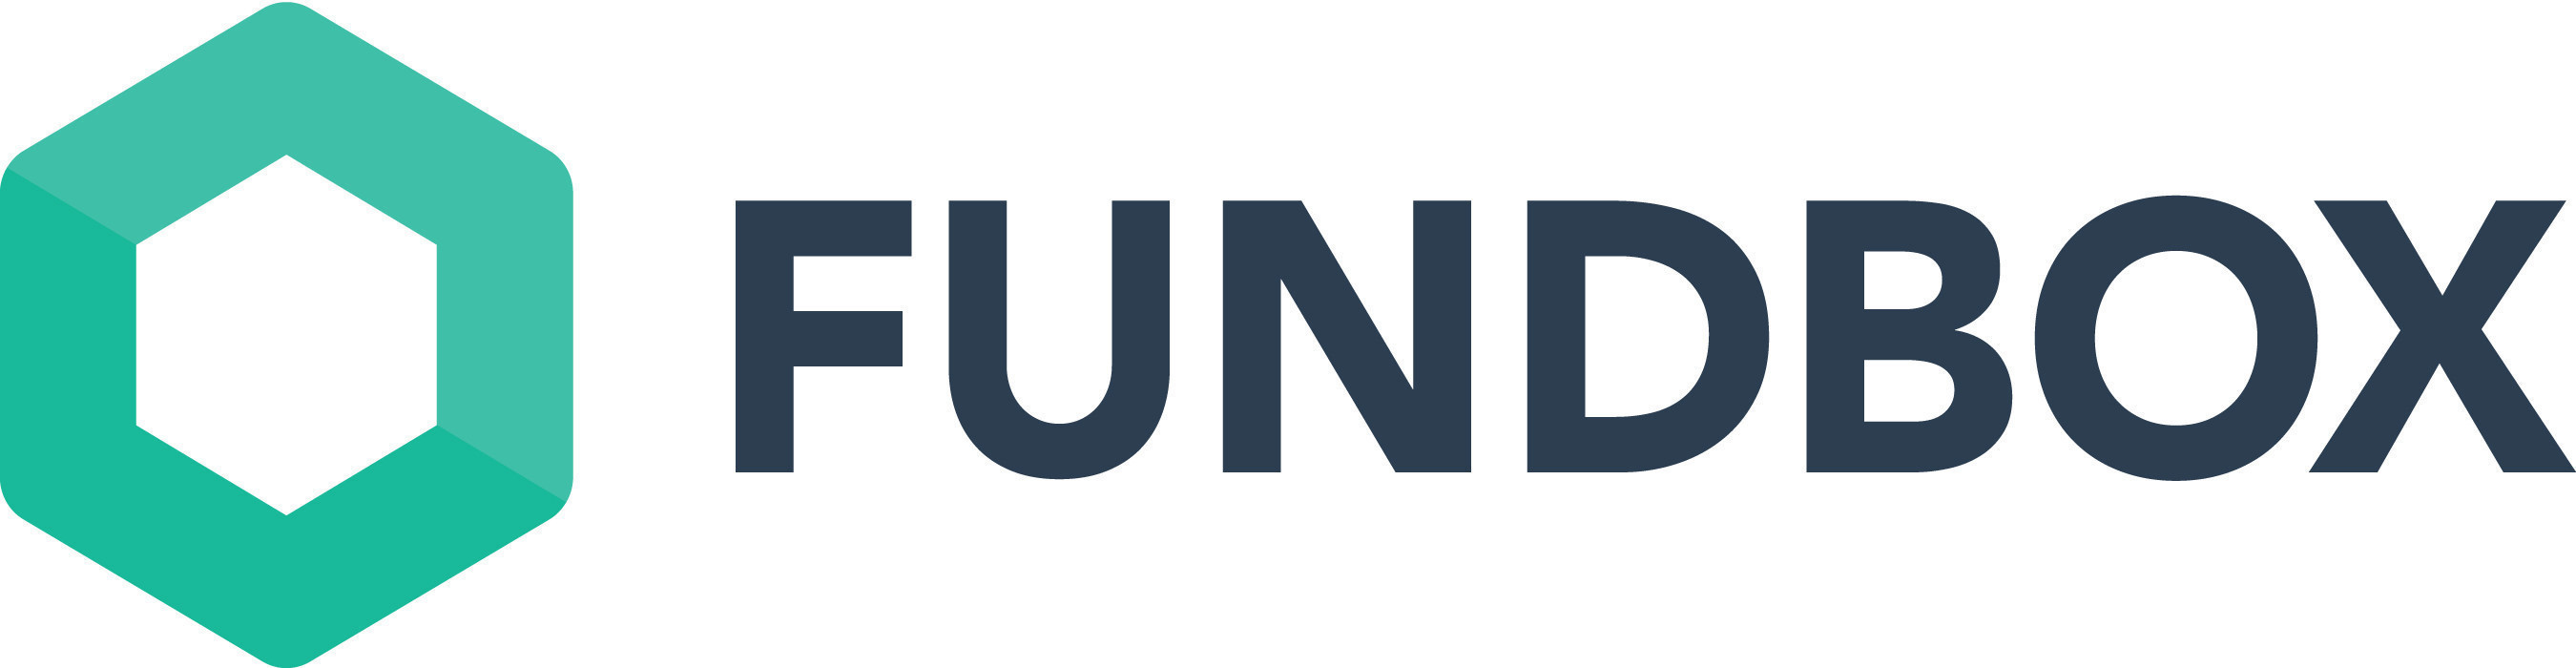 Fundbox announces new round of funding